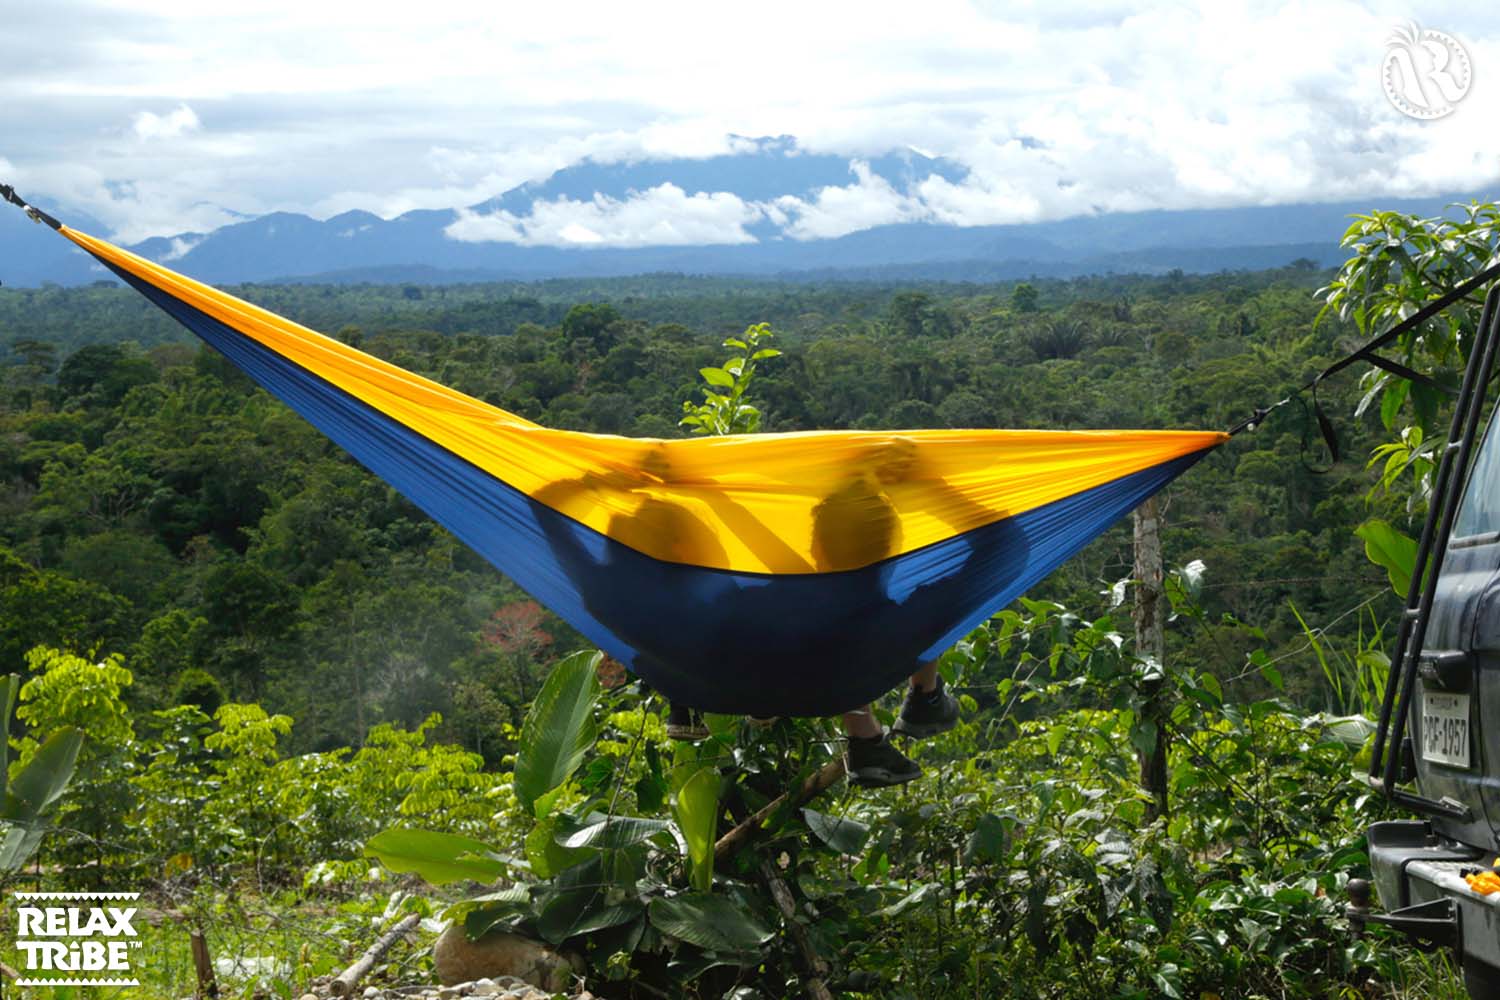 adventure-xxl-nemo-double-portable-travel-hammock-outdoor-camping-blue-yellow-offroad-landscape